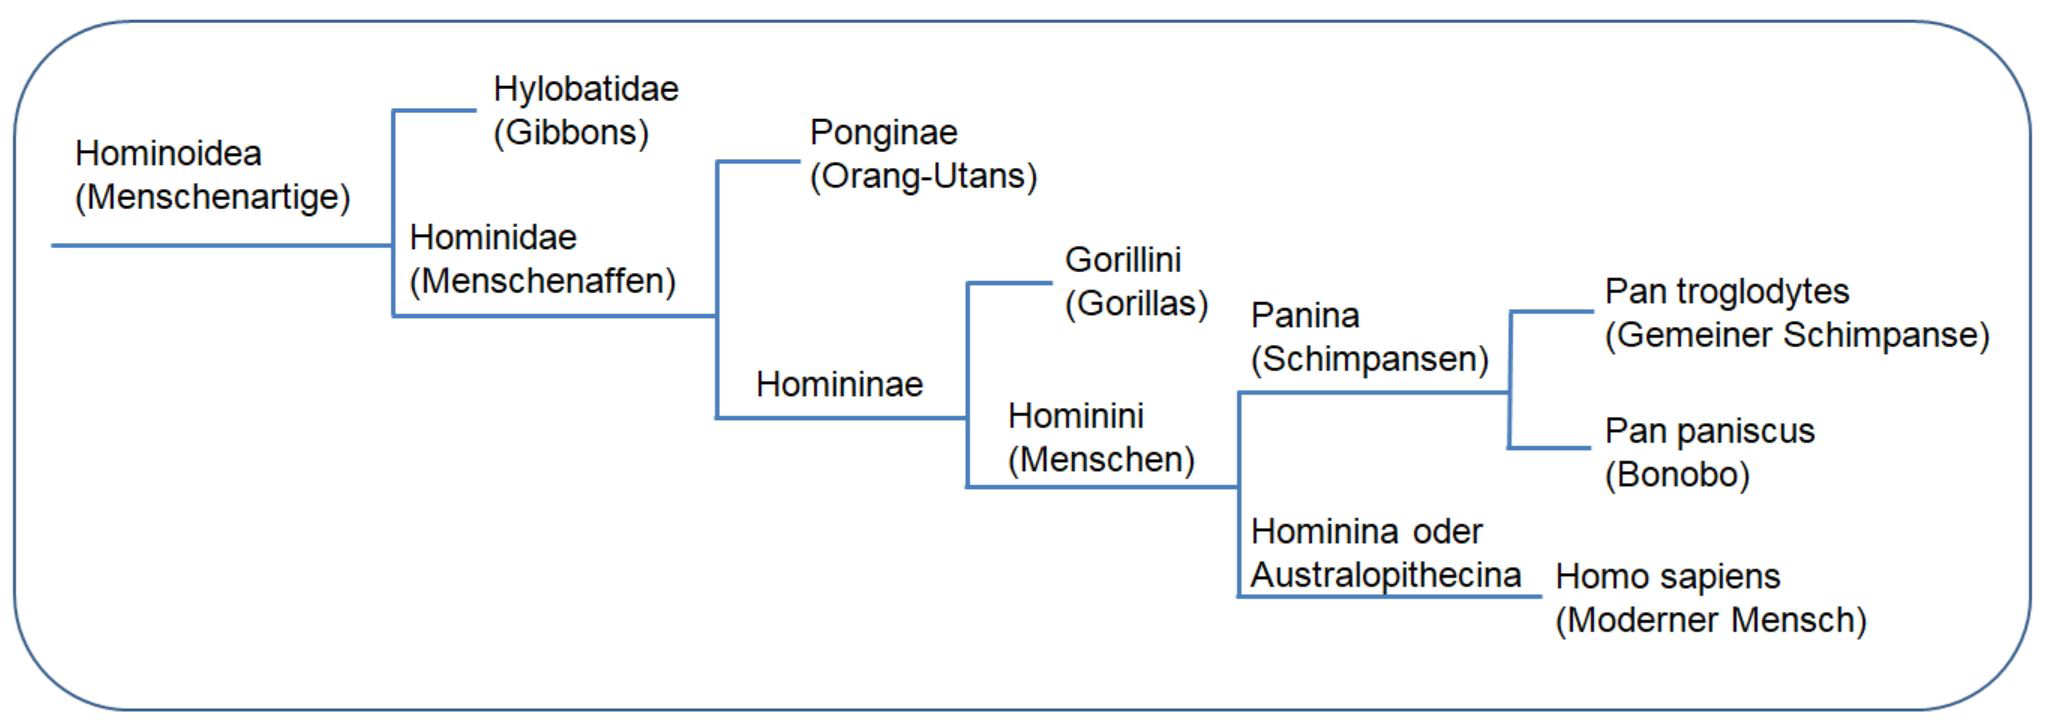 Kladogramm Hominoidea